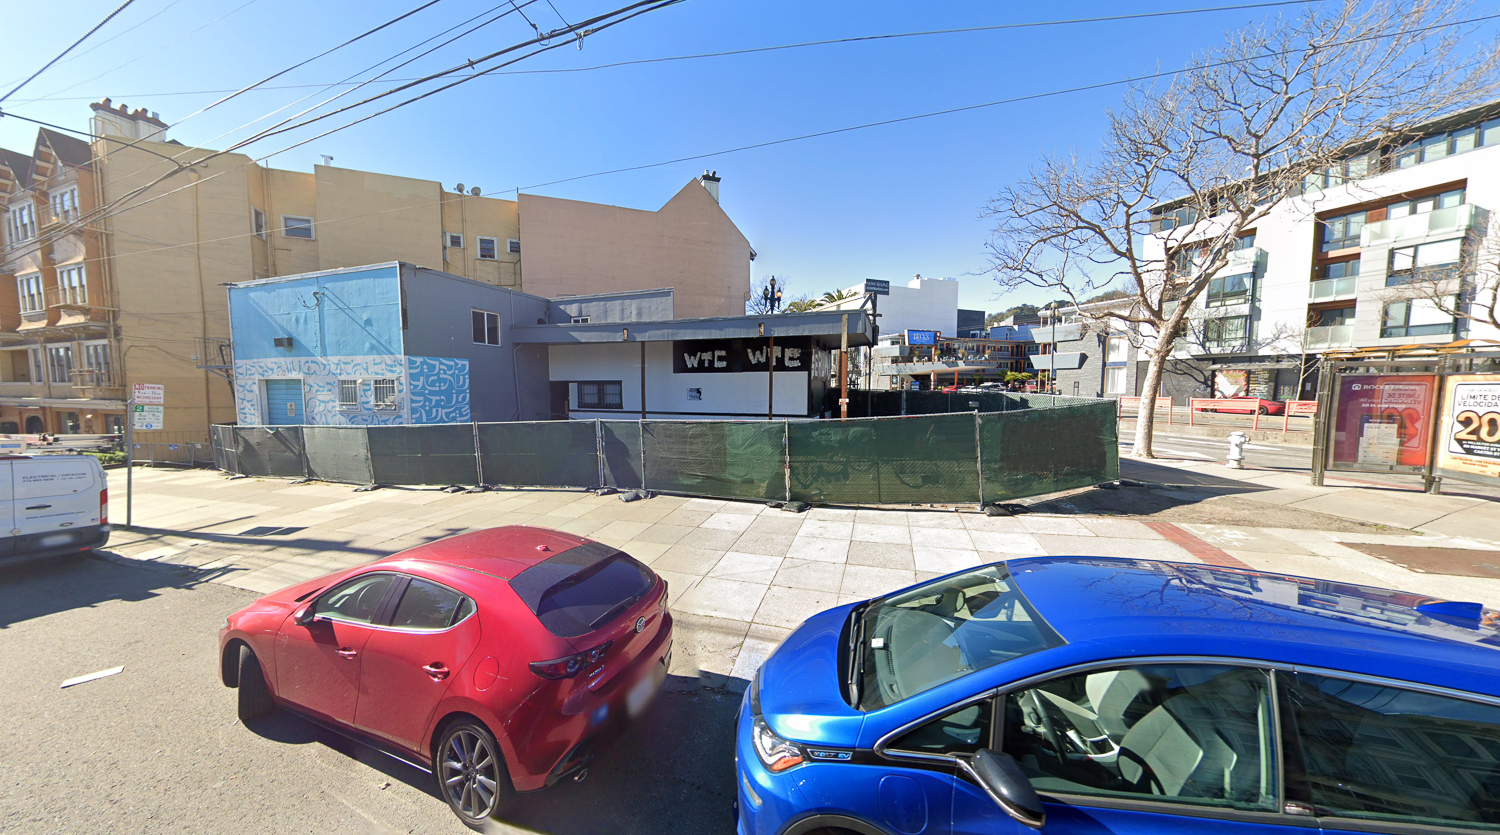 2201 Market Street, image via Google Street View